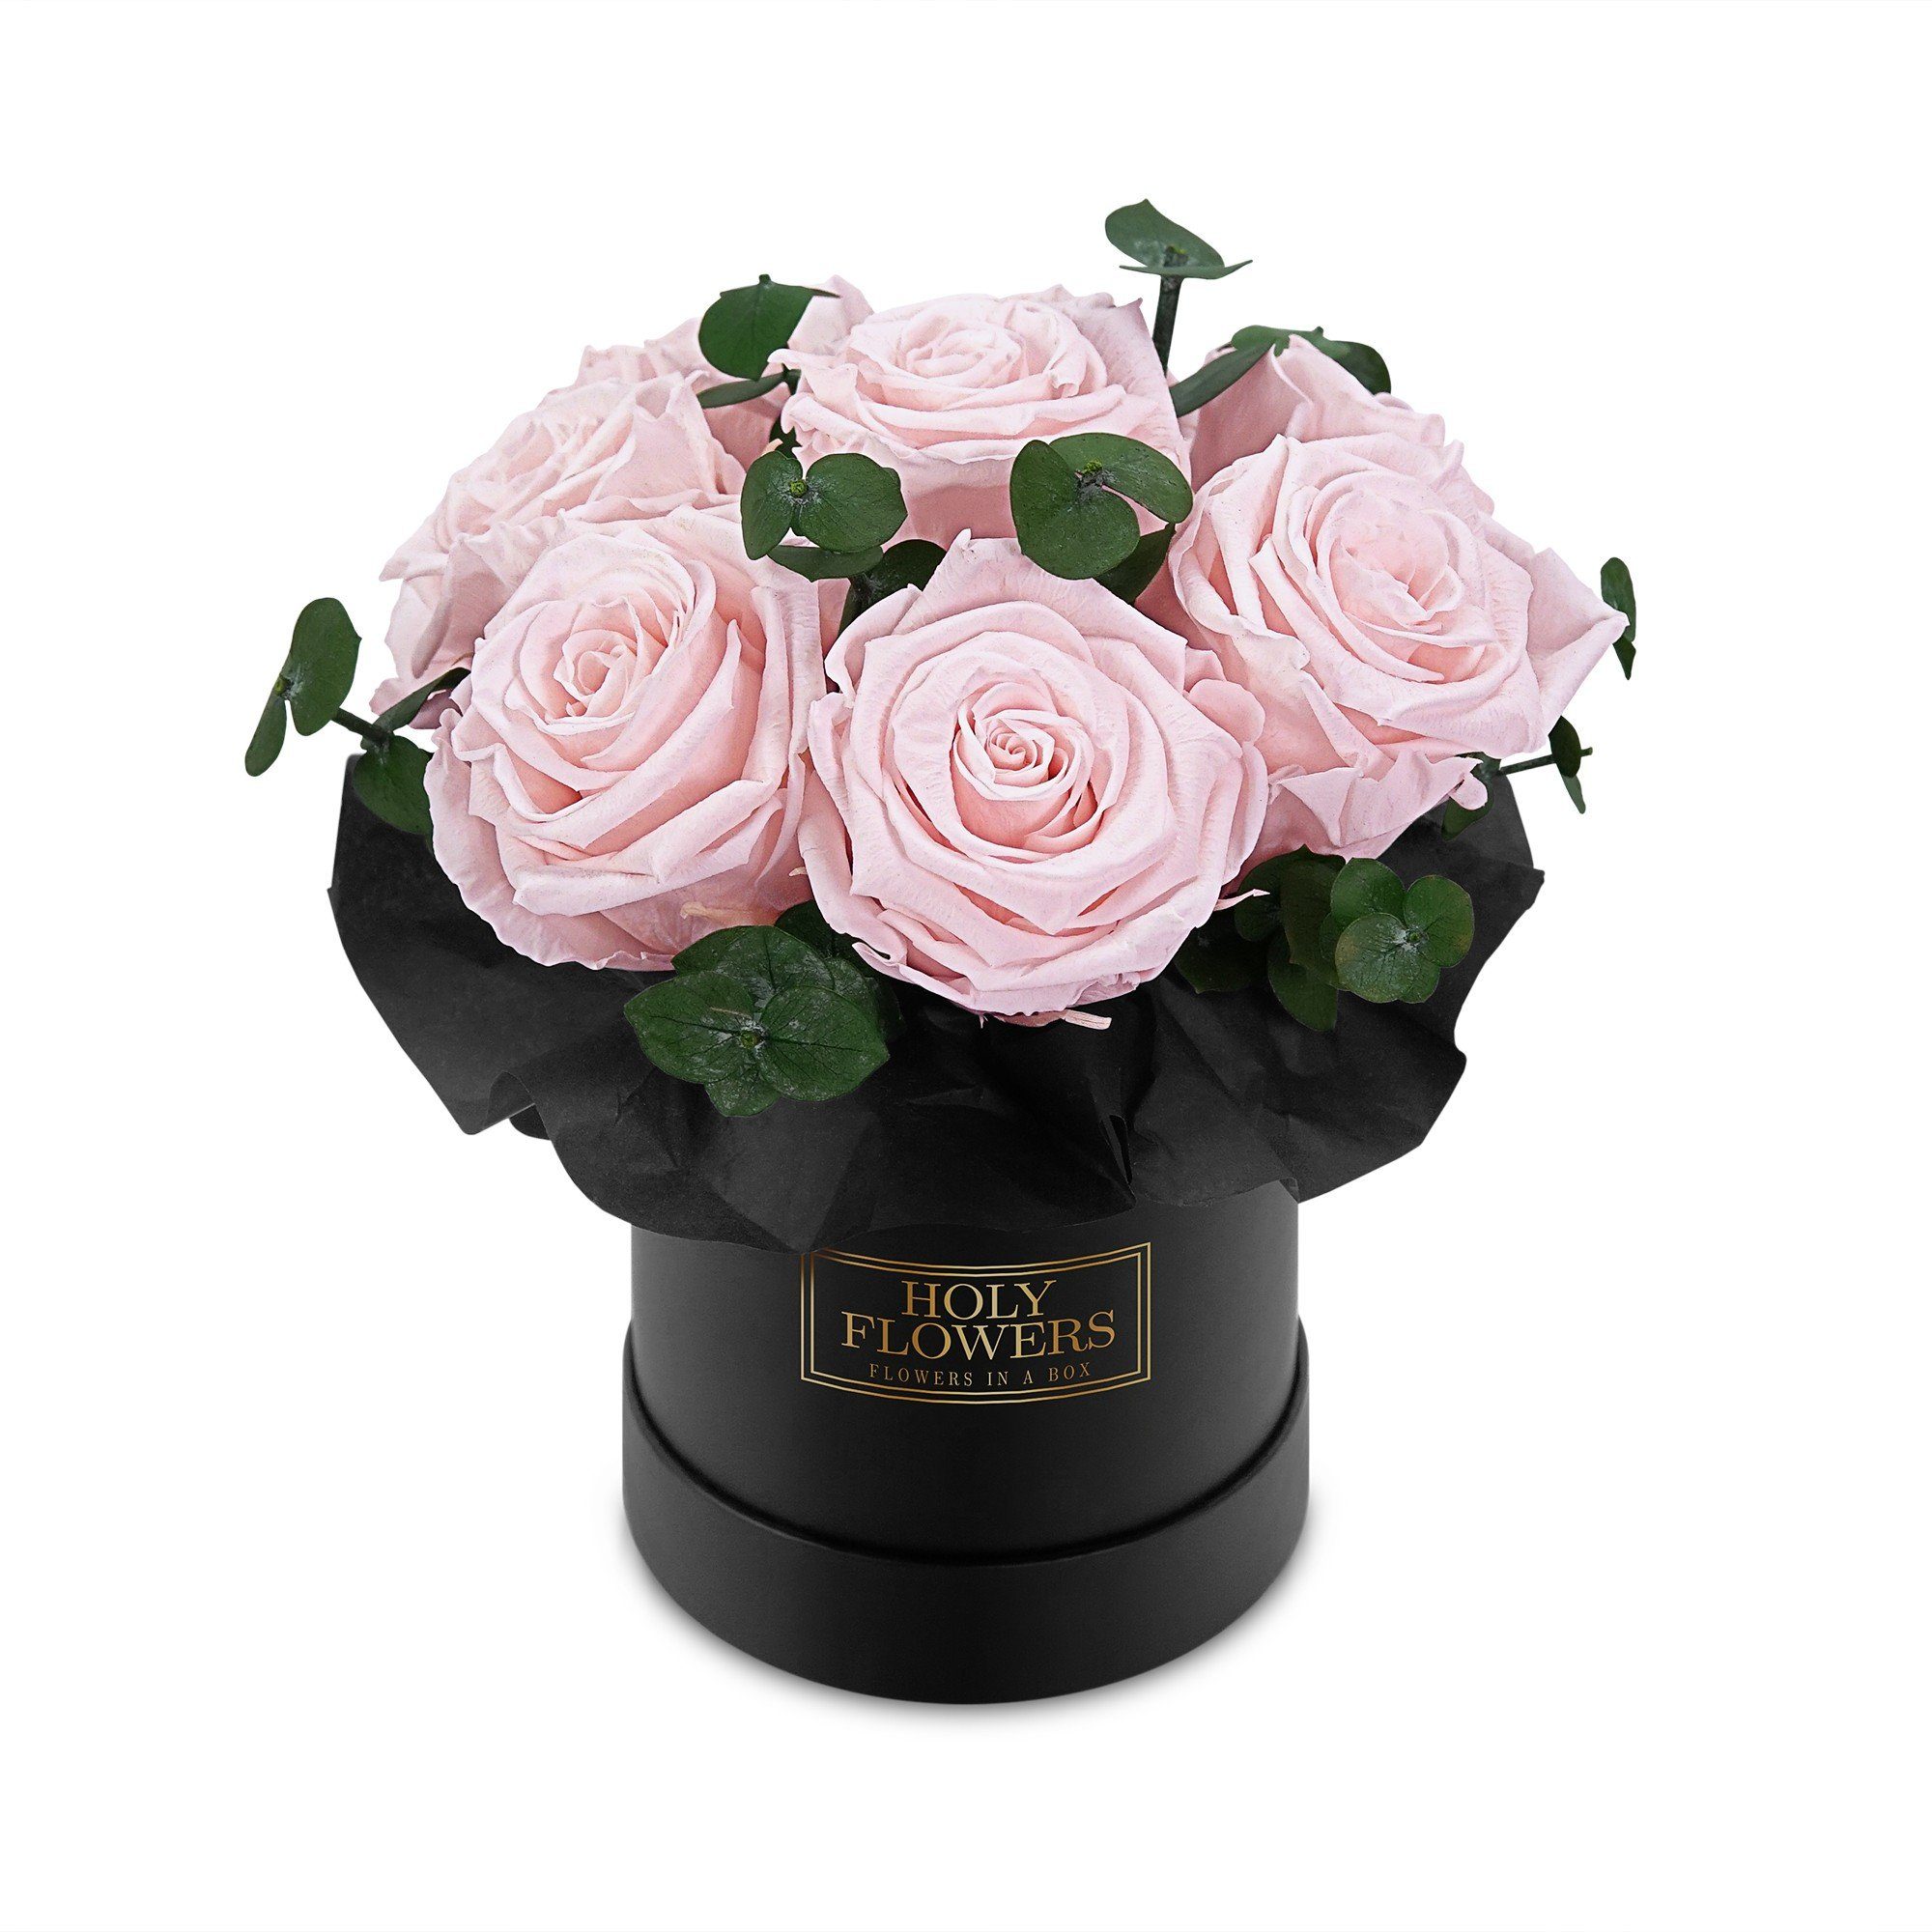 3 mit I Raul konservierte I Jahre Holy Kunstblume Rose, Bouquet Blumen 7-9 Echte, by Infinity Flowers Richter duftende Rosenbox Hellrosa I Rosen haltbar